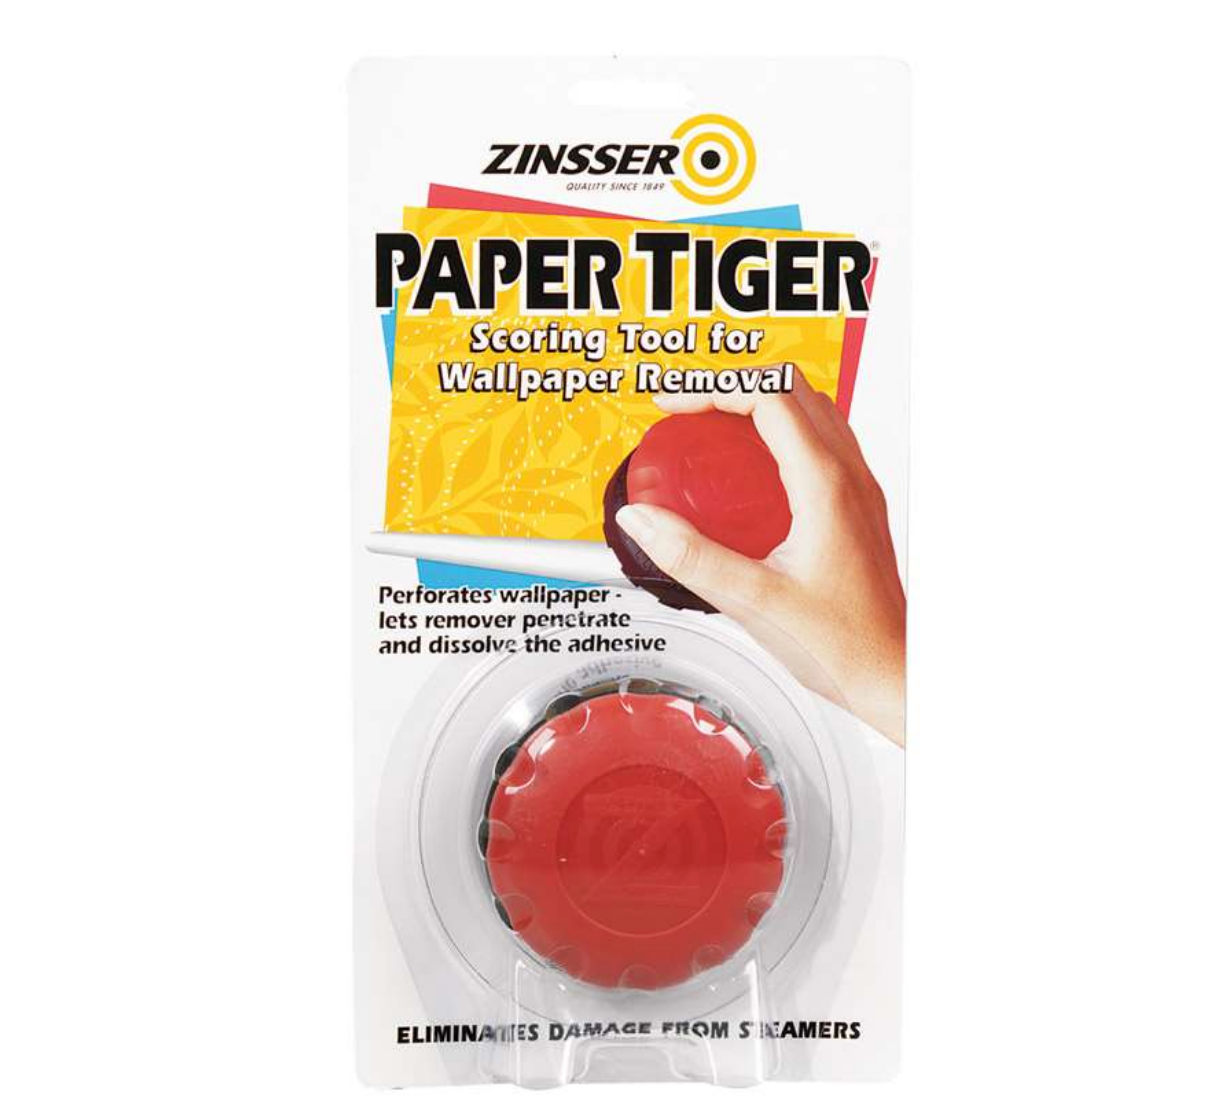 Paper Tiger Wallpaper Removal Tool - Aboff's